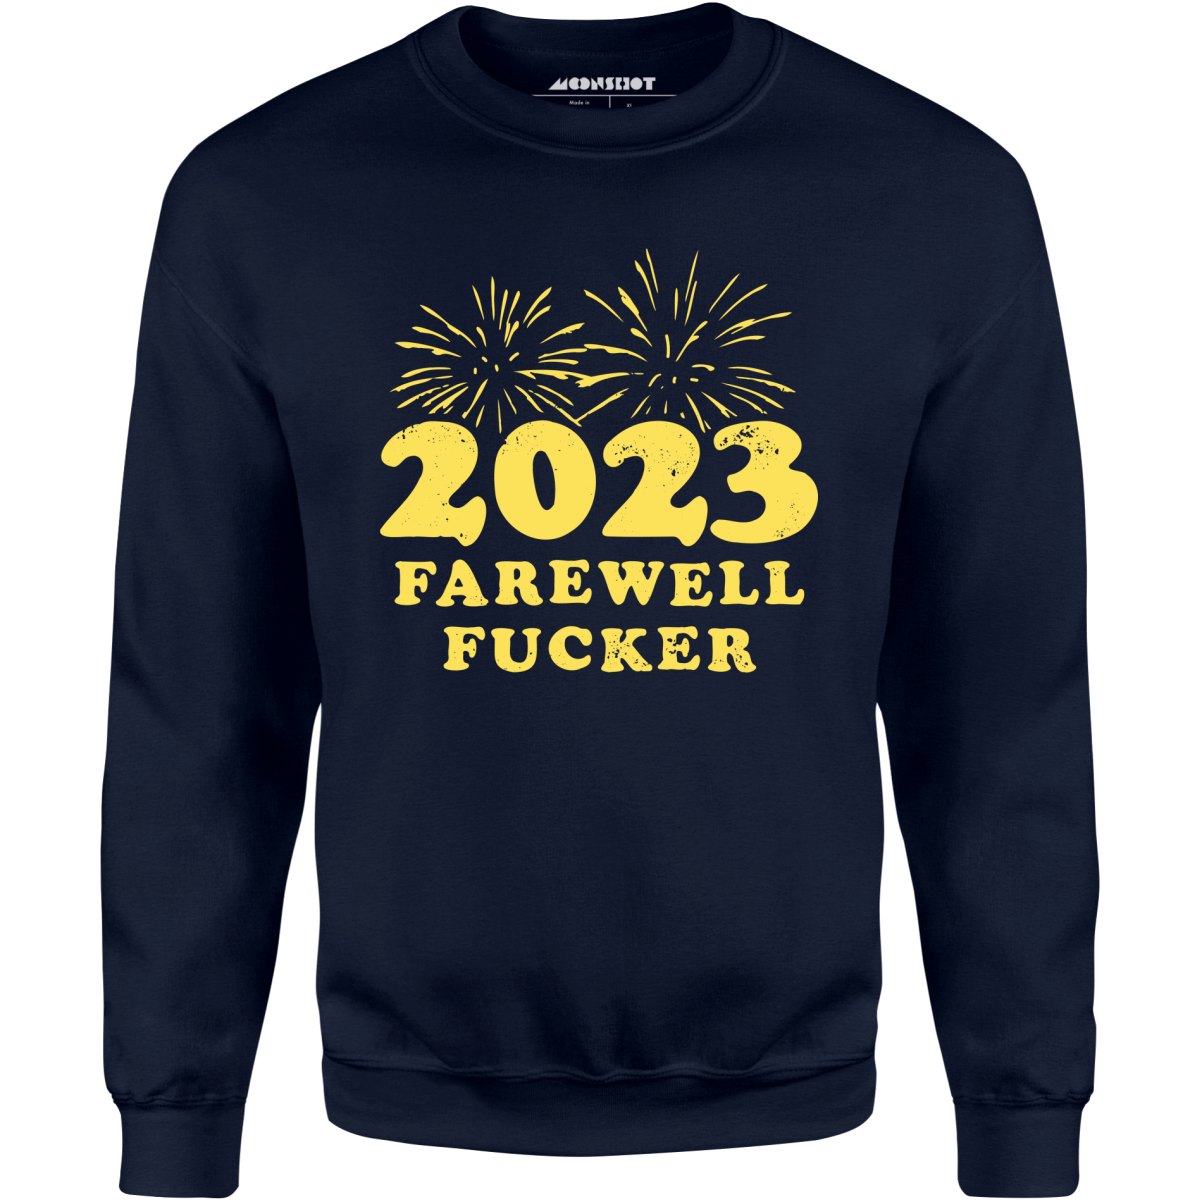 2023 Farewell Fucker - Unisex Sweatshirt